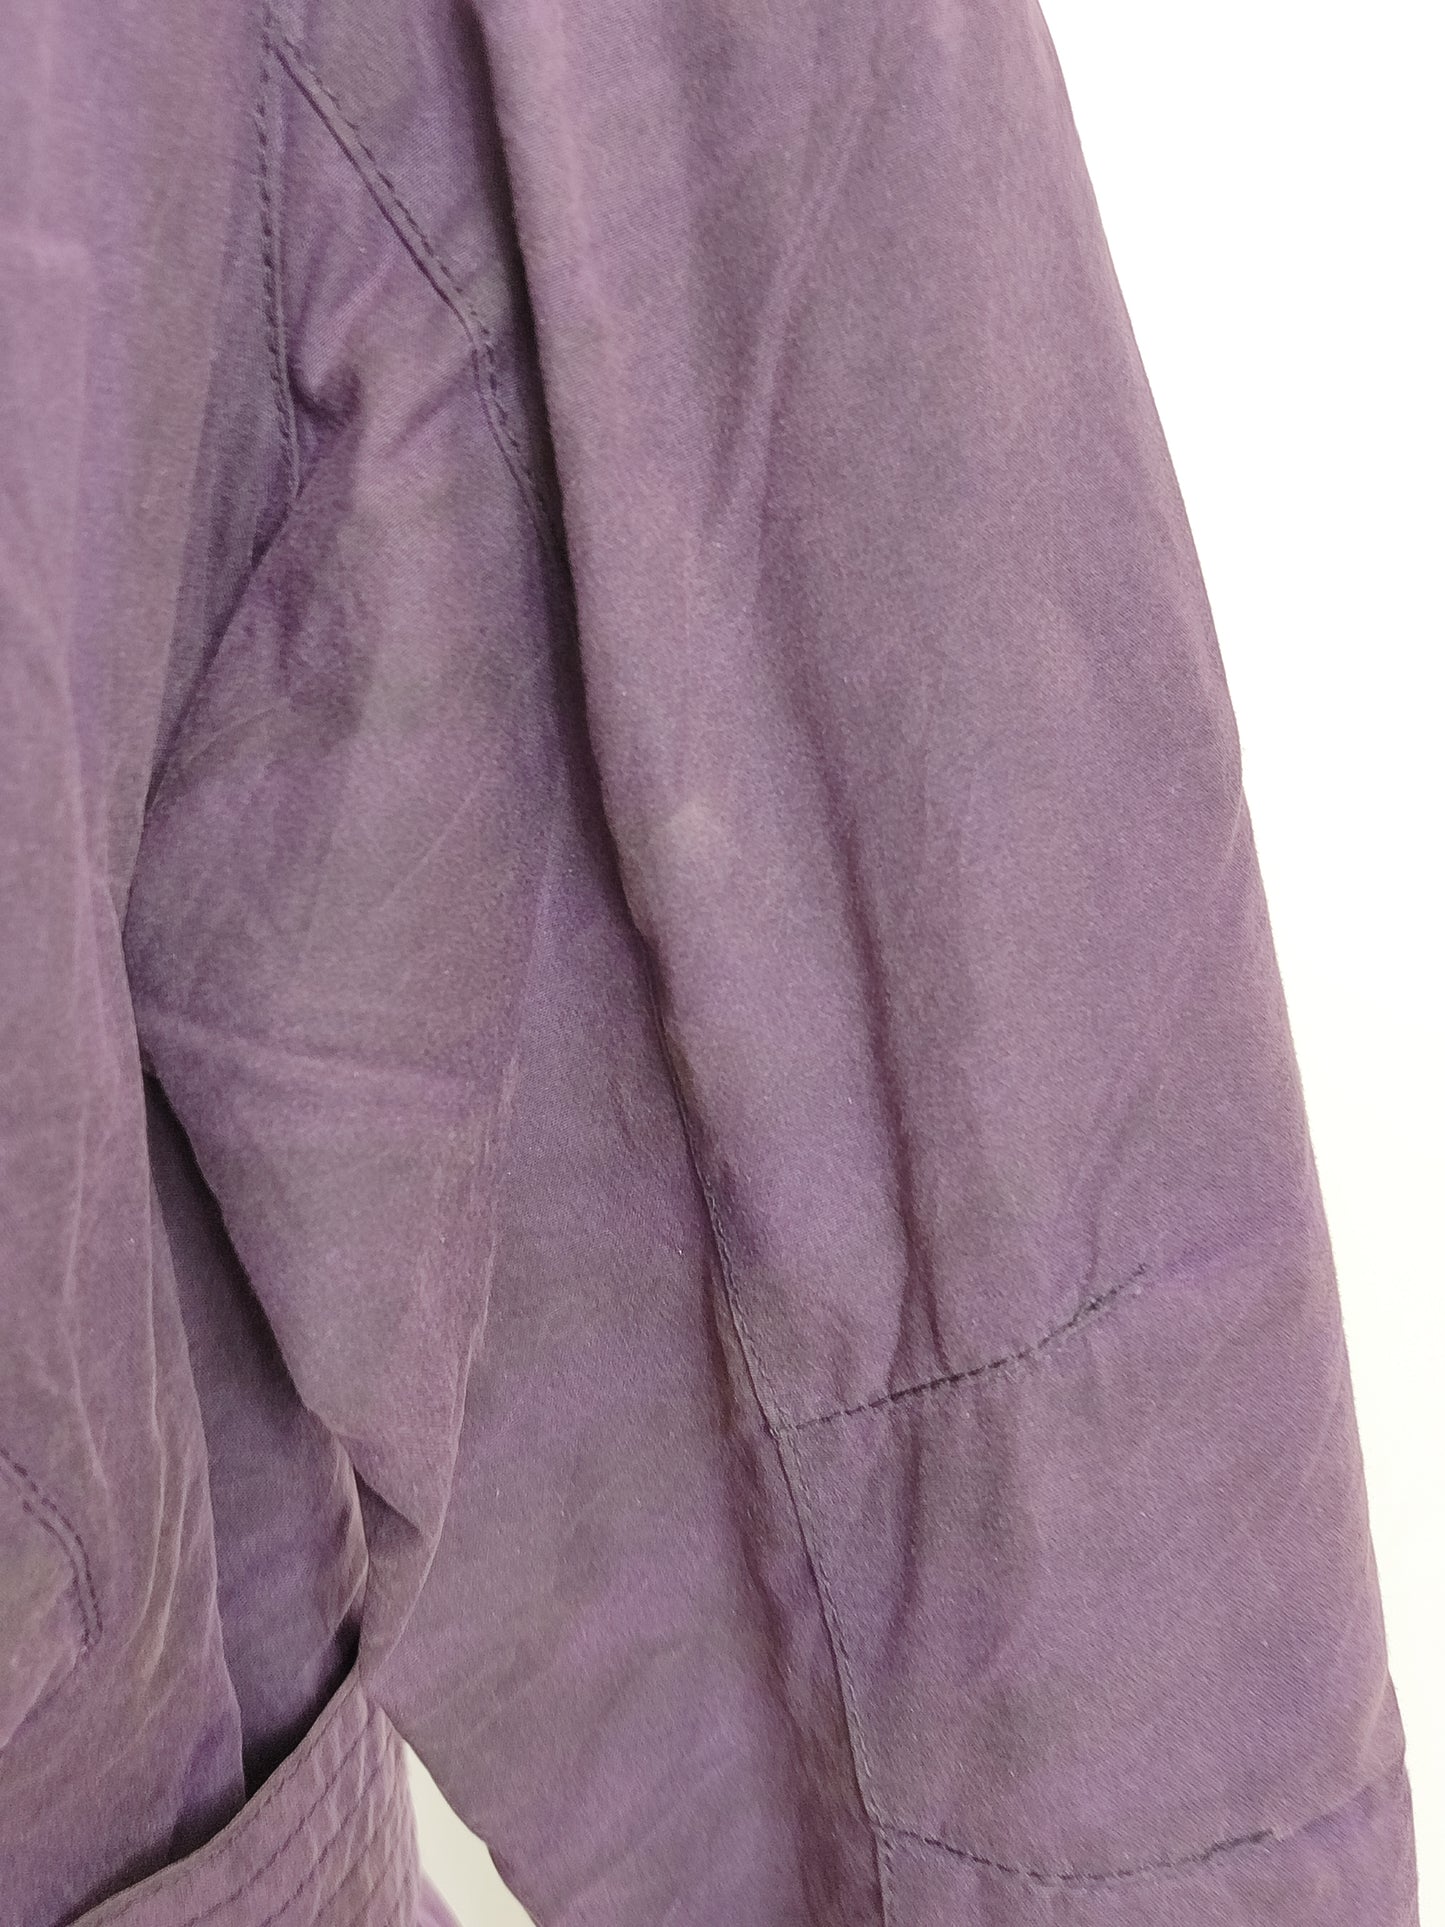 Giacca Barbour donna viola Rebel UK16 tg. 44/46 Purple Lady Wax Rebel jacket size uk16